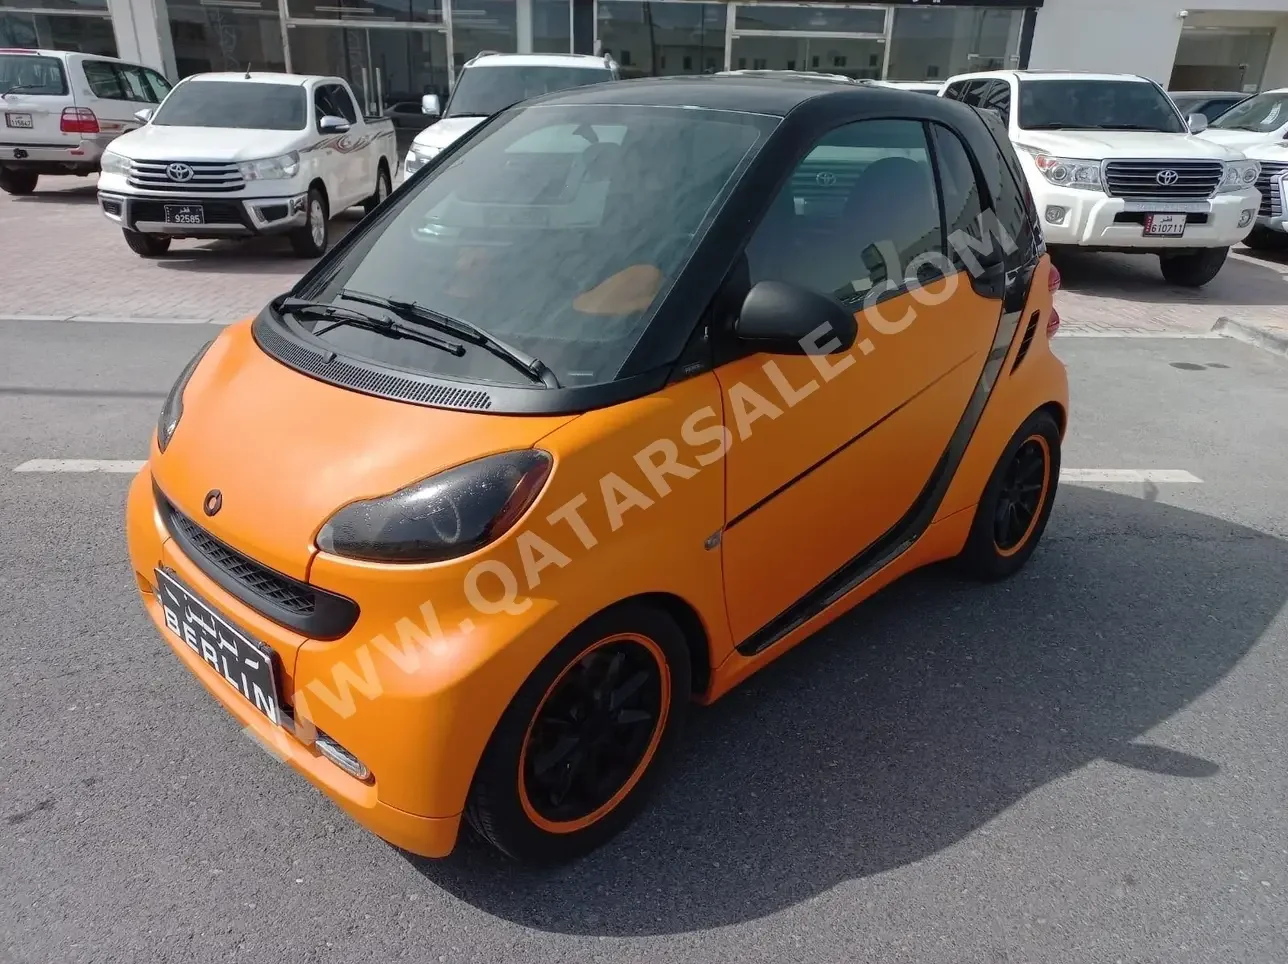 Smart  MHD  2015  Automatic  52,000 Km  4 Cylinder  Front Wheel Drive (FWD)  Hatchback  Orange